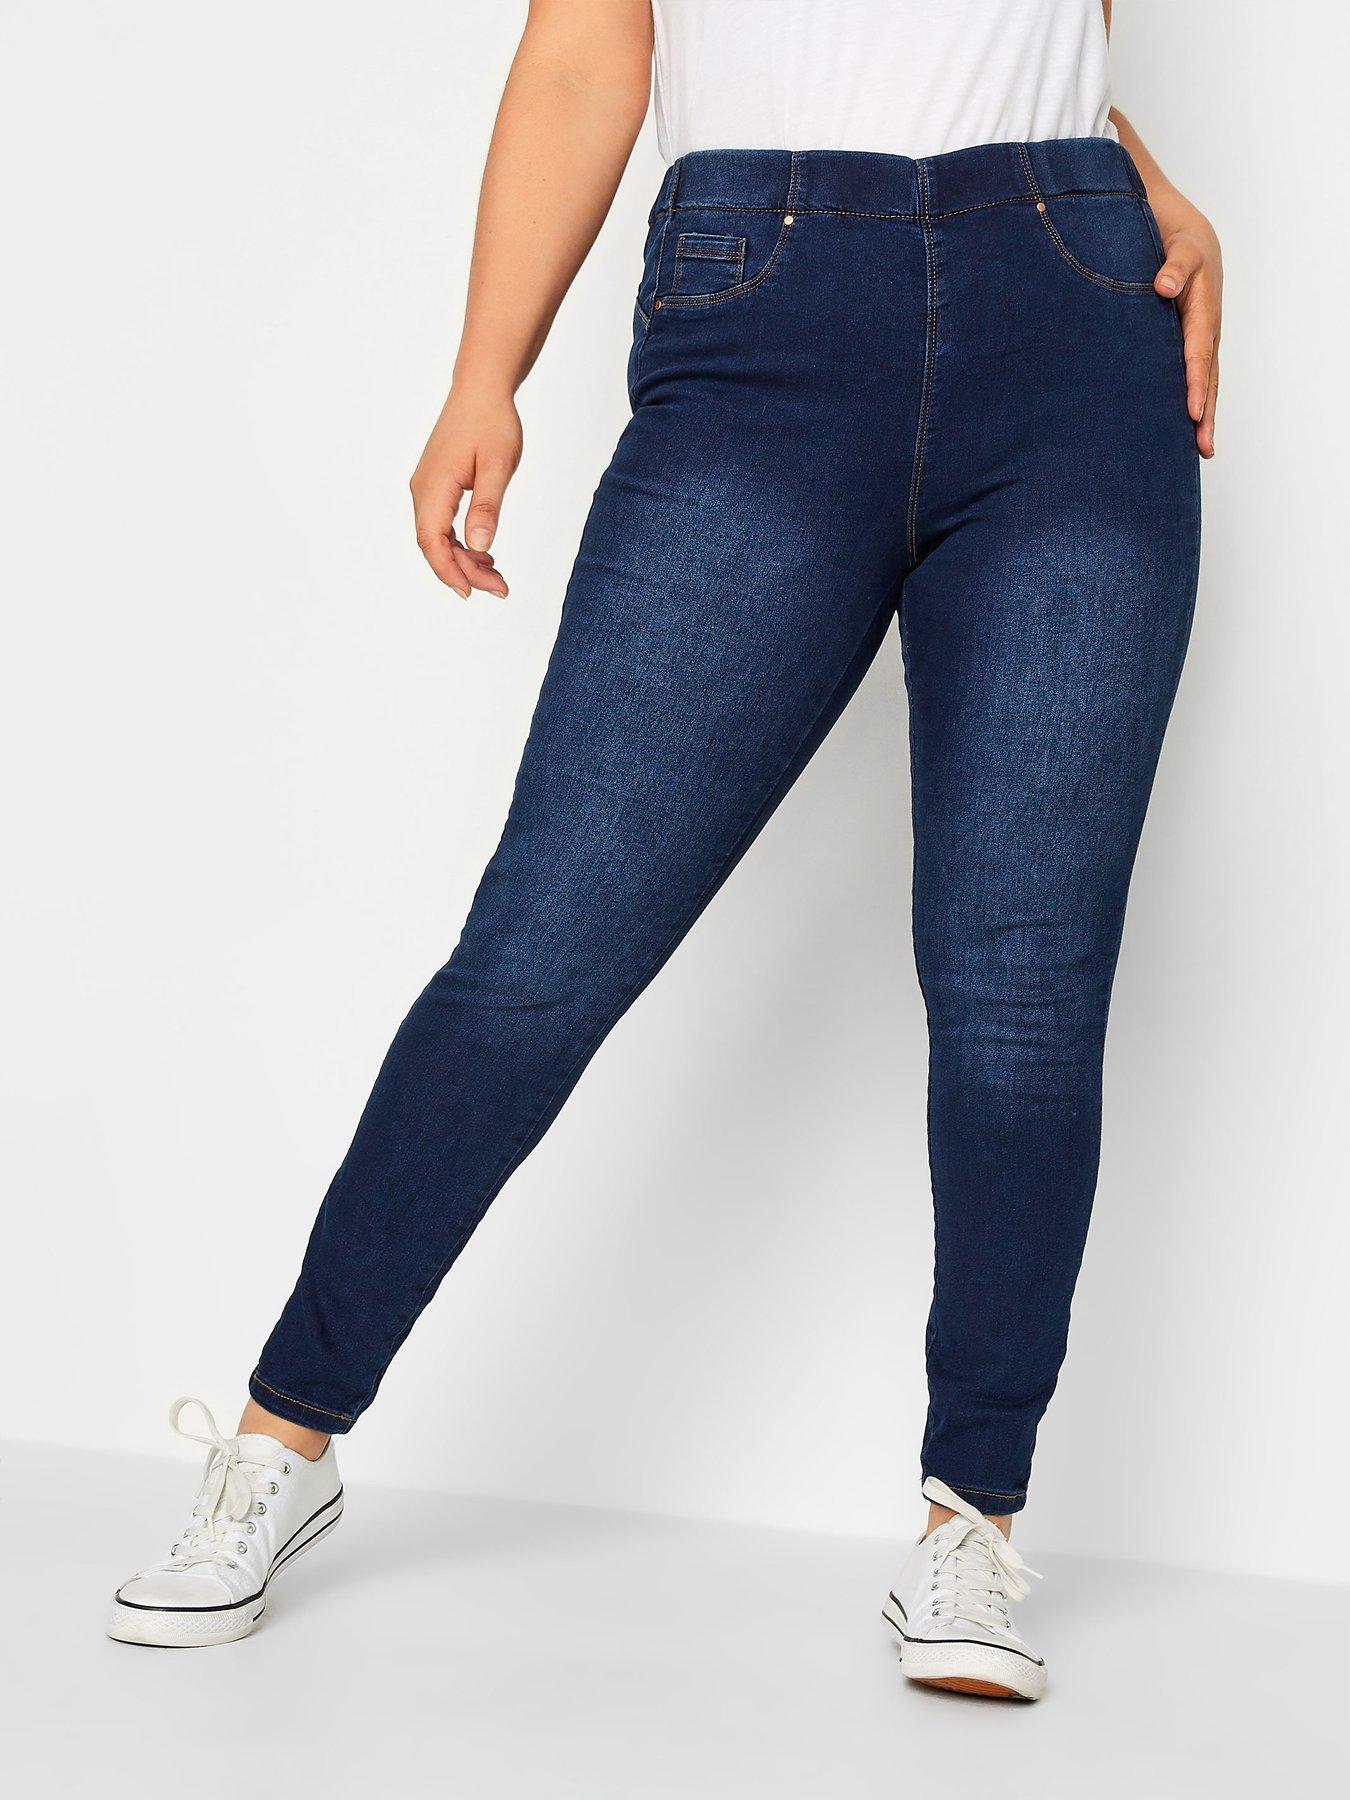 New Look Maternity Lift & Shape Black Emilee Jegging Jeans Size 8